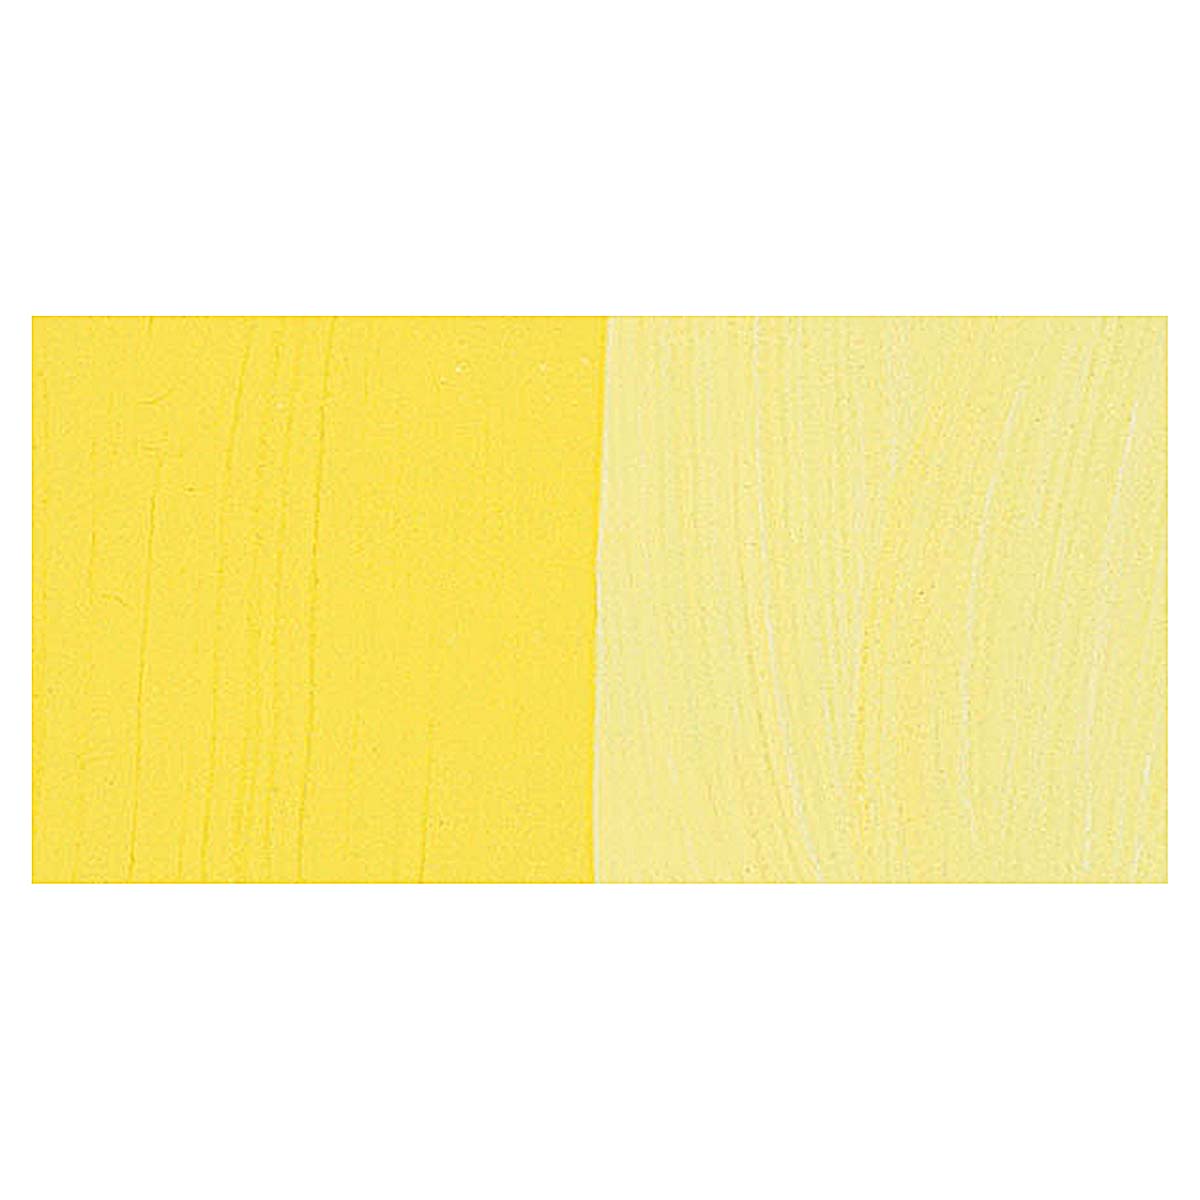 Gouache Set- Winsor & Newton Designers Gouache set- 6 Primary Colours – WoW  Art Supplies